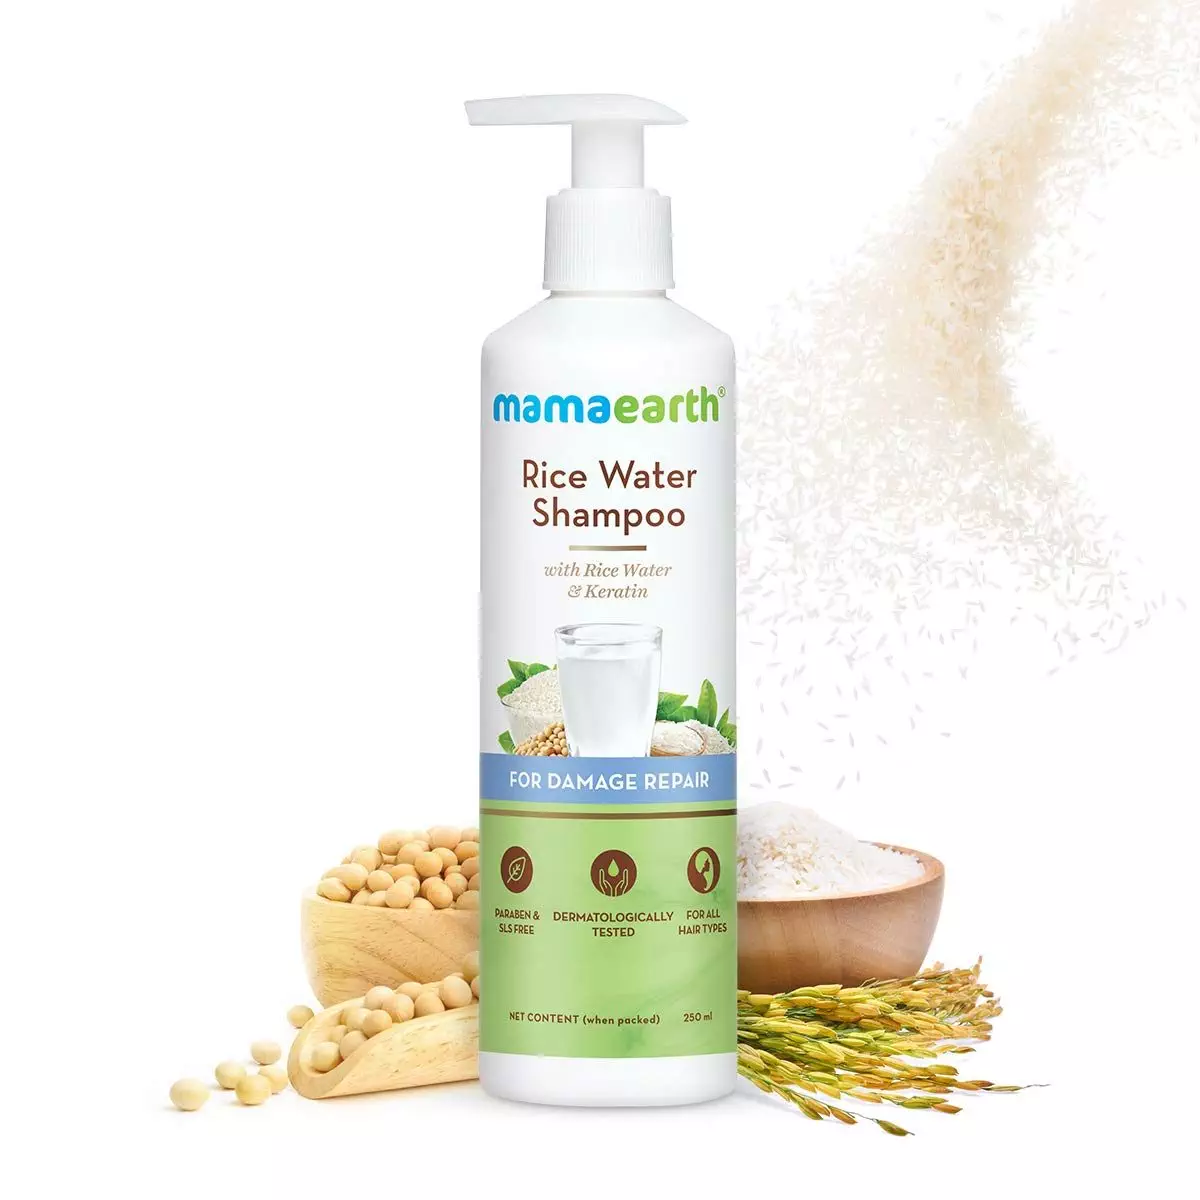 Mamaearth Rice Water Shampoo Review 1